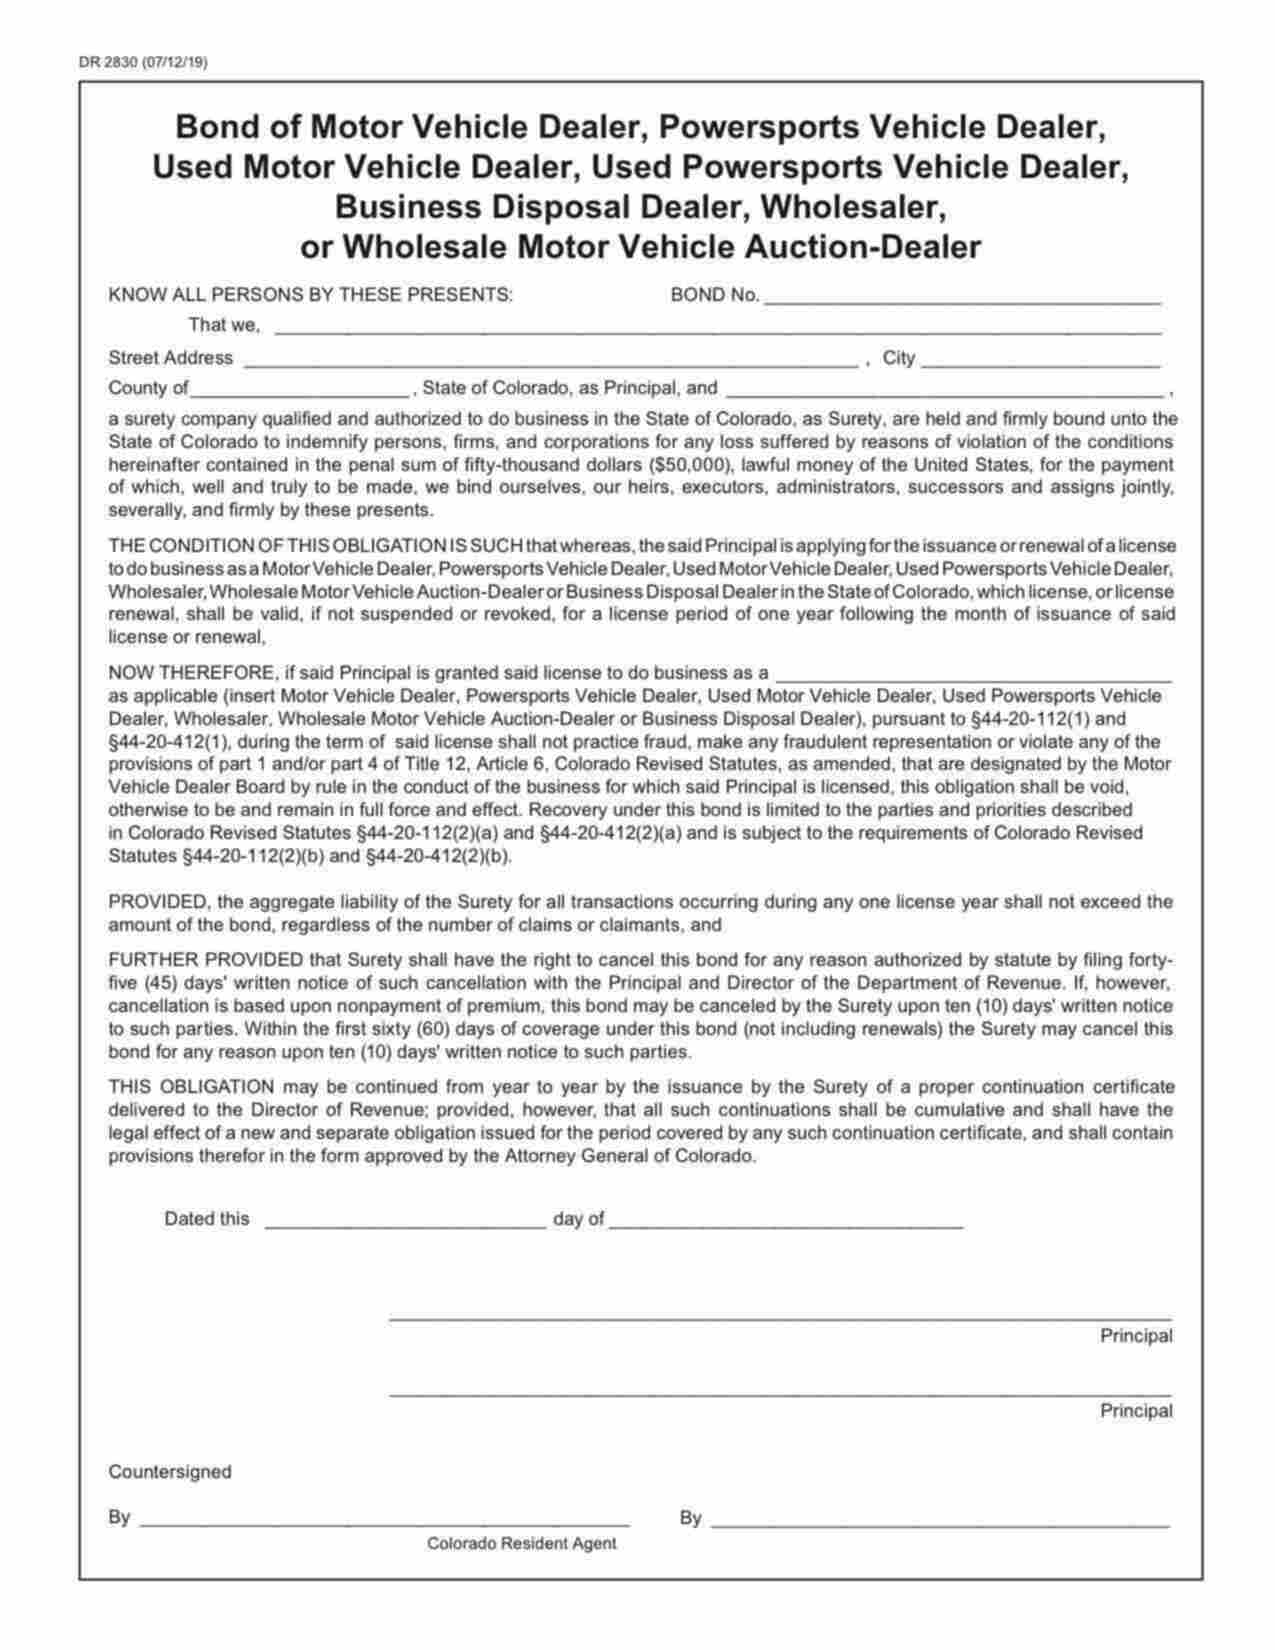 Colorado Used Powersports Vehicle Dealer Bond Form